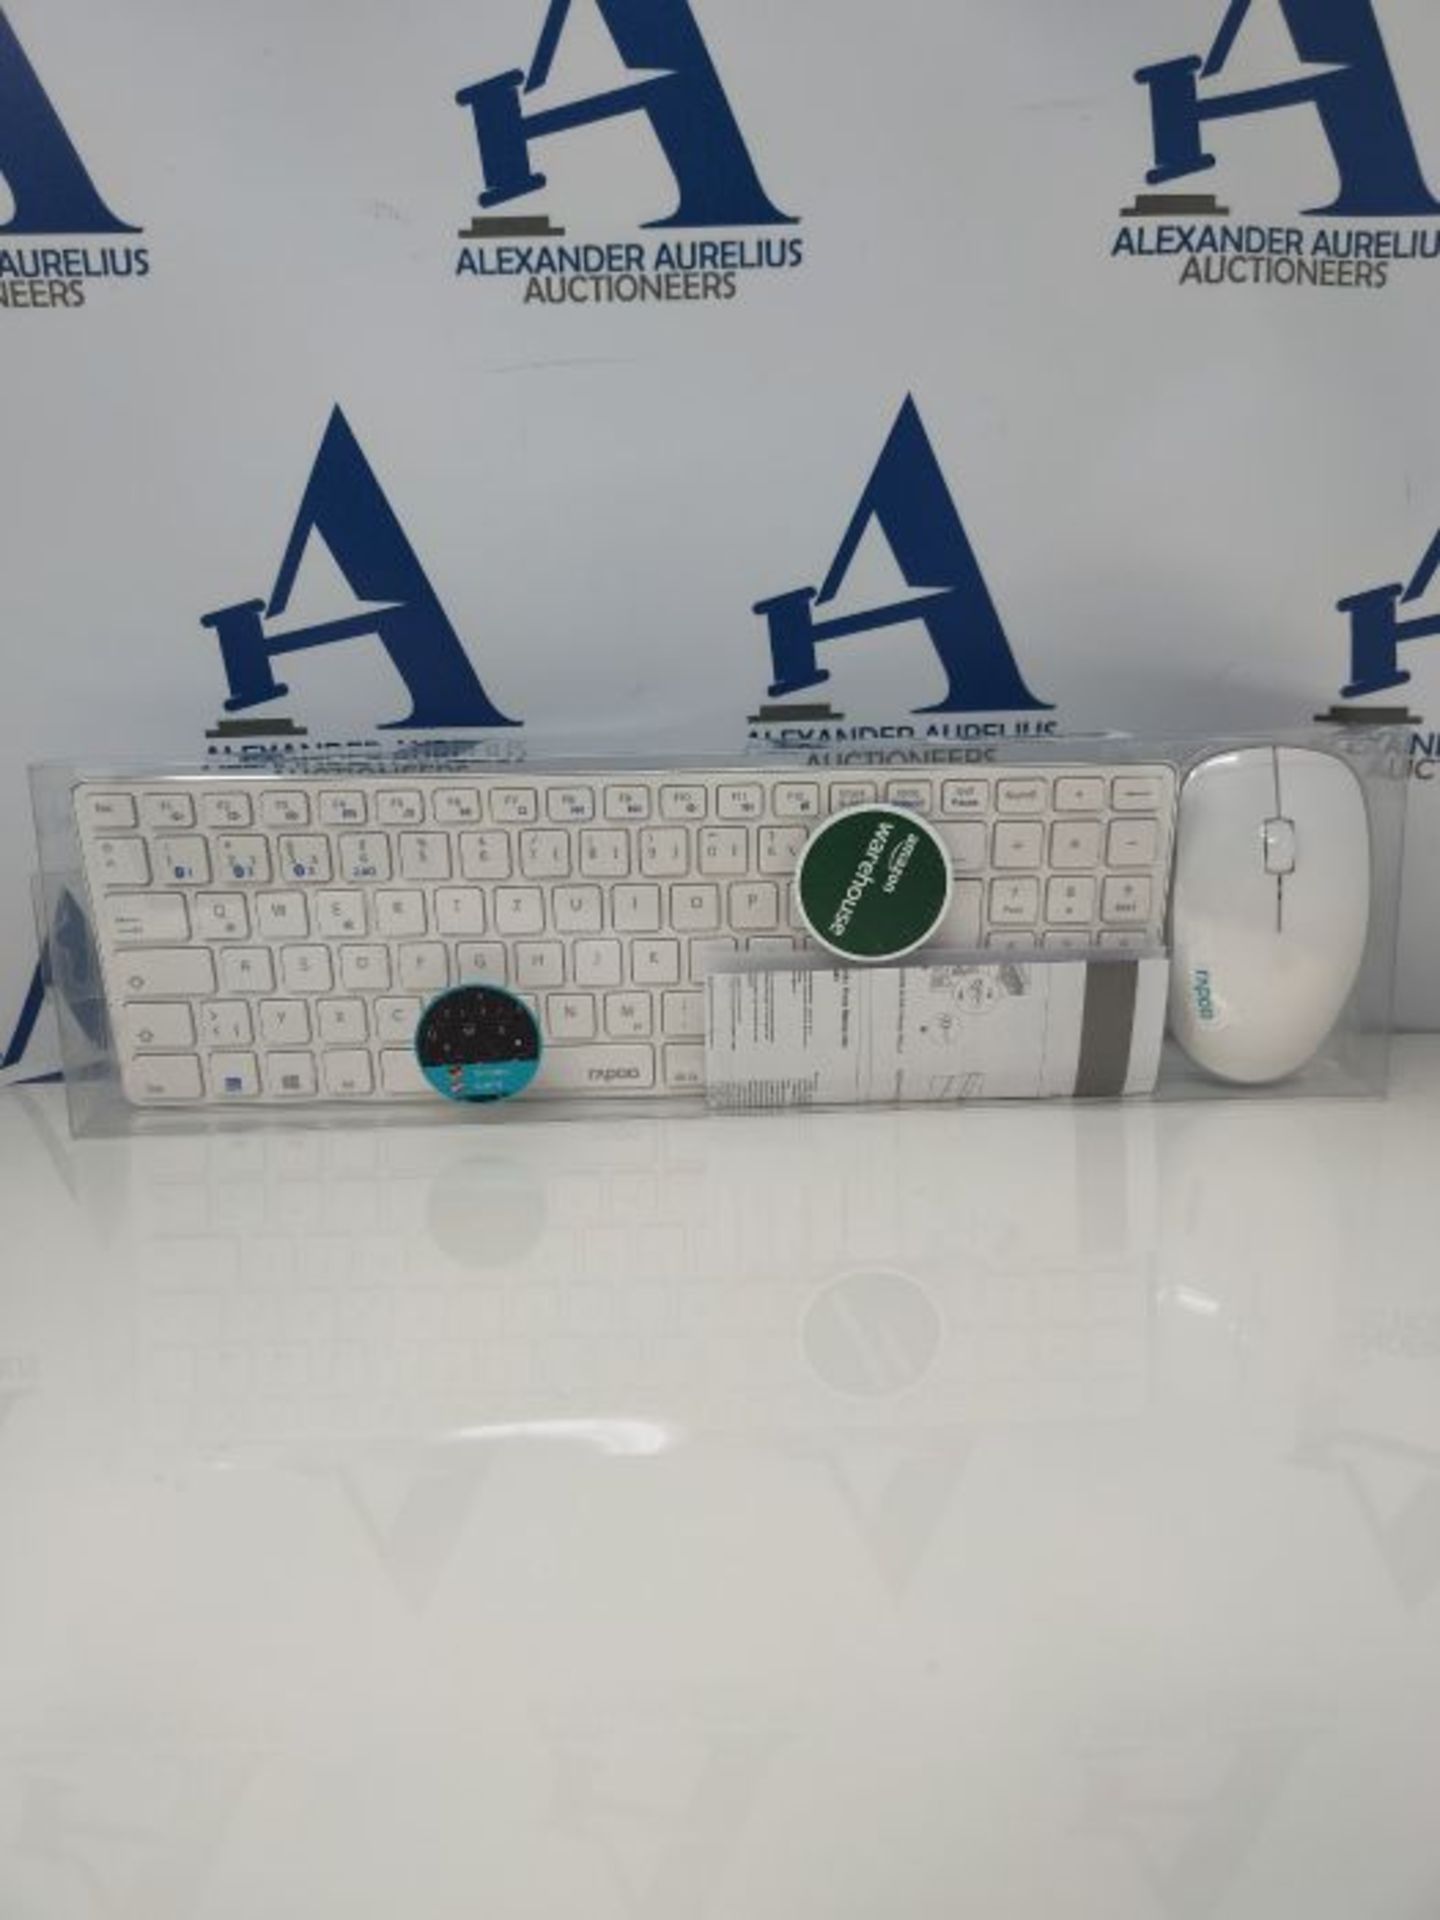 Rapoo 9300M Wireless Keyboard Mouse Set, Bluetooth and Wireless (2.4 GHz) via USB, Fla - Image 2 of 3